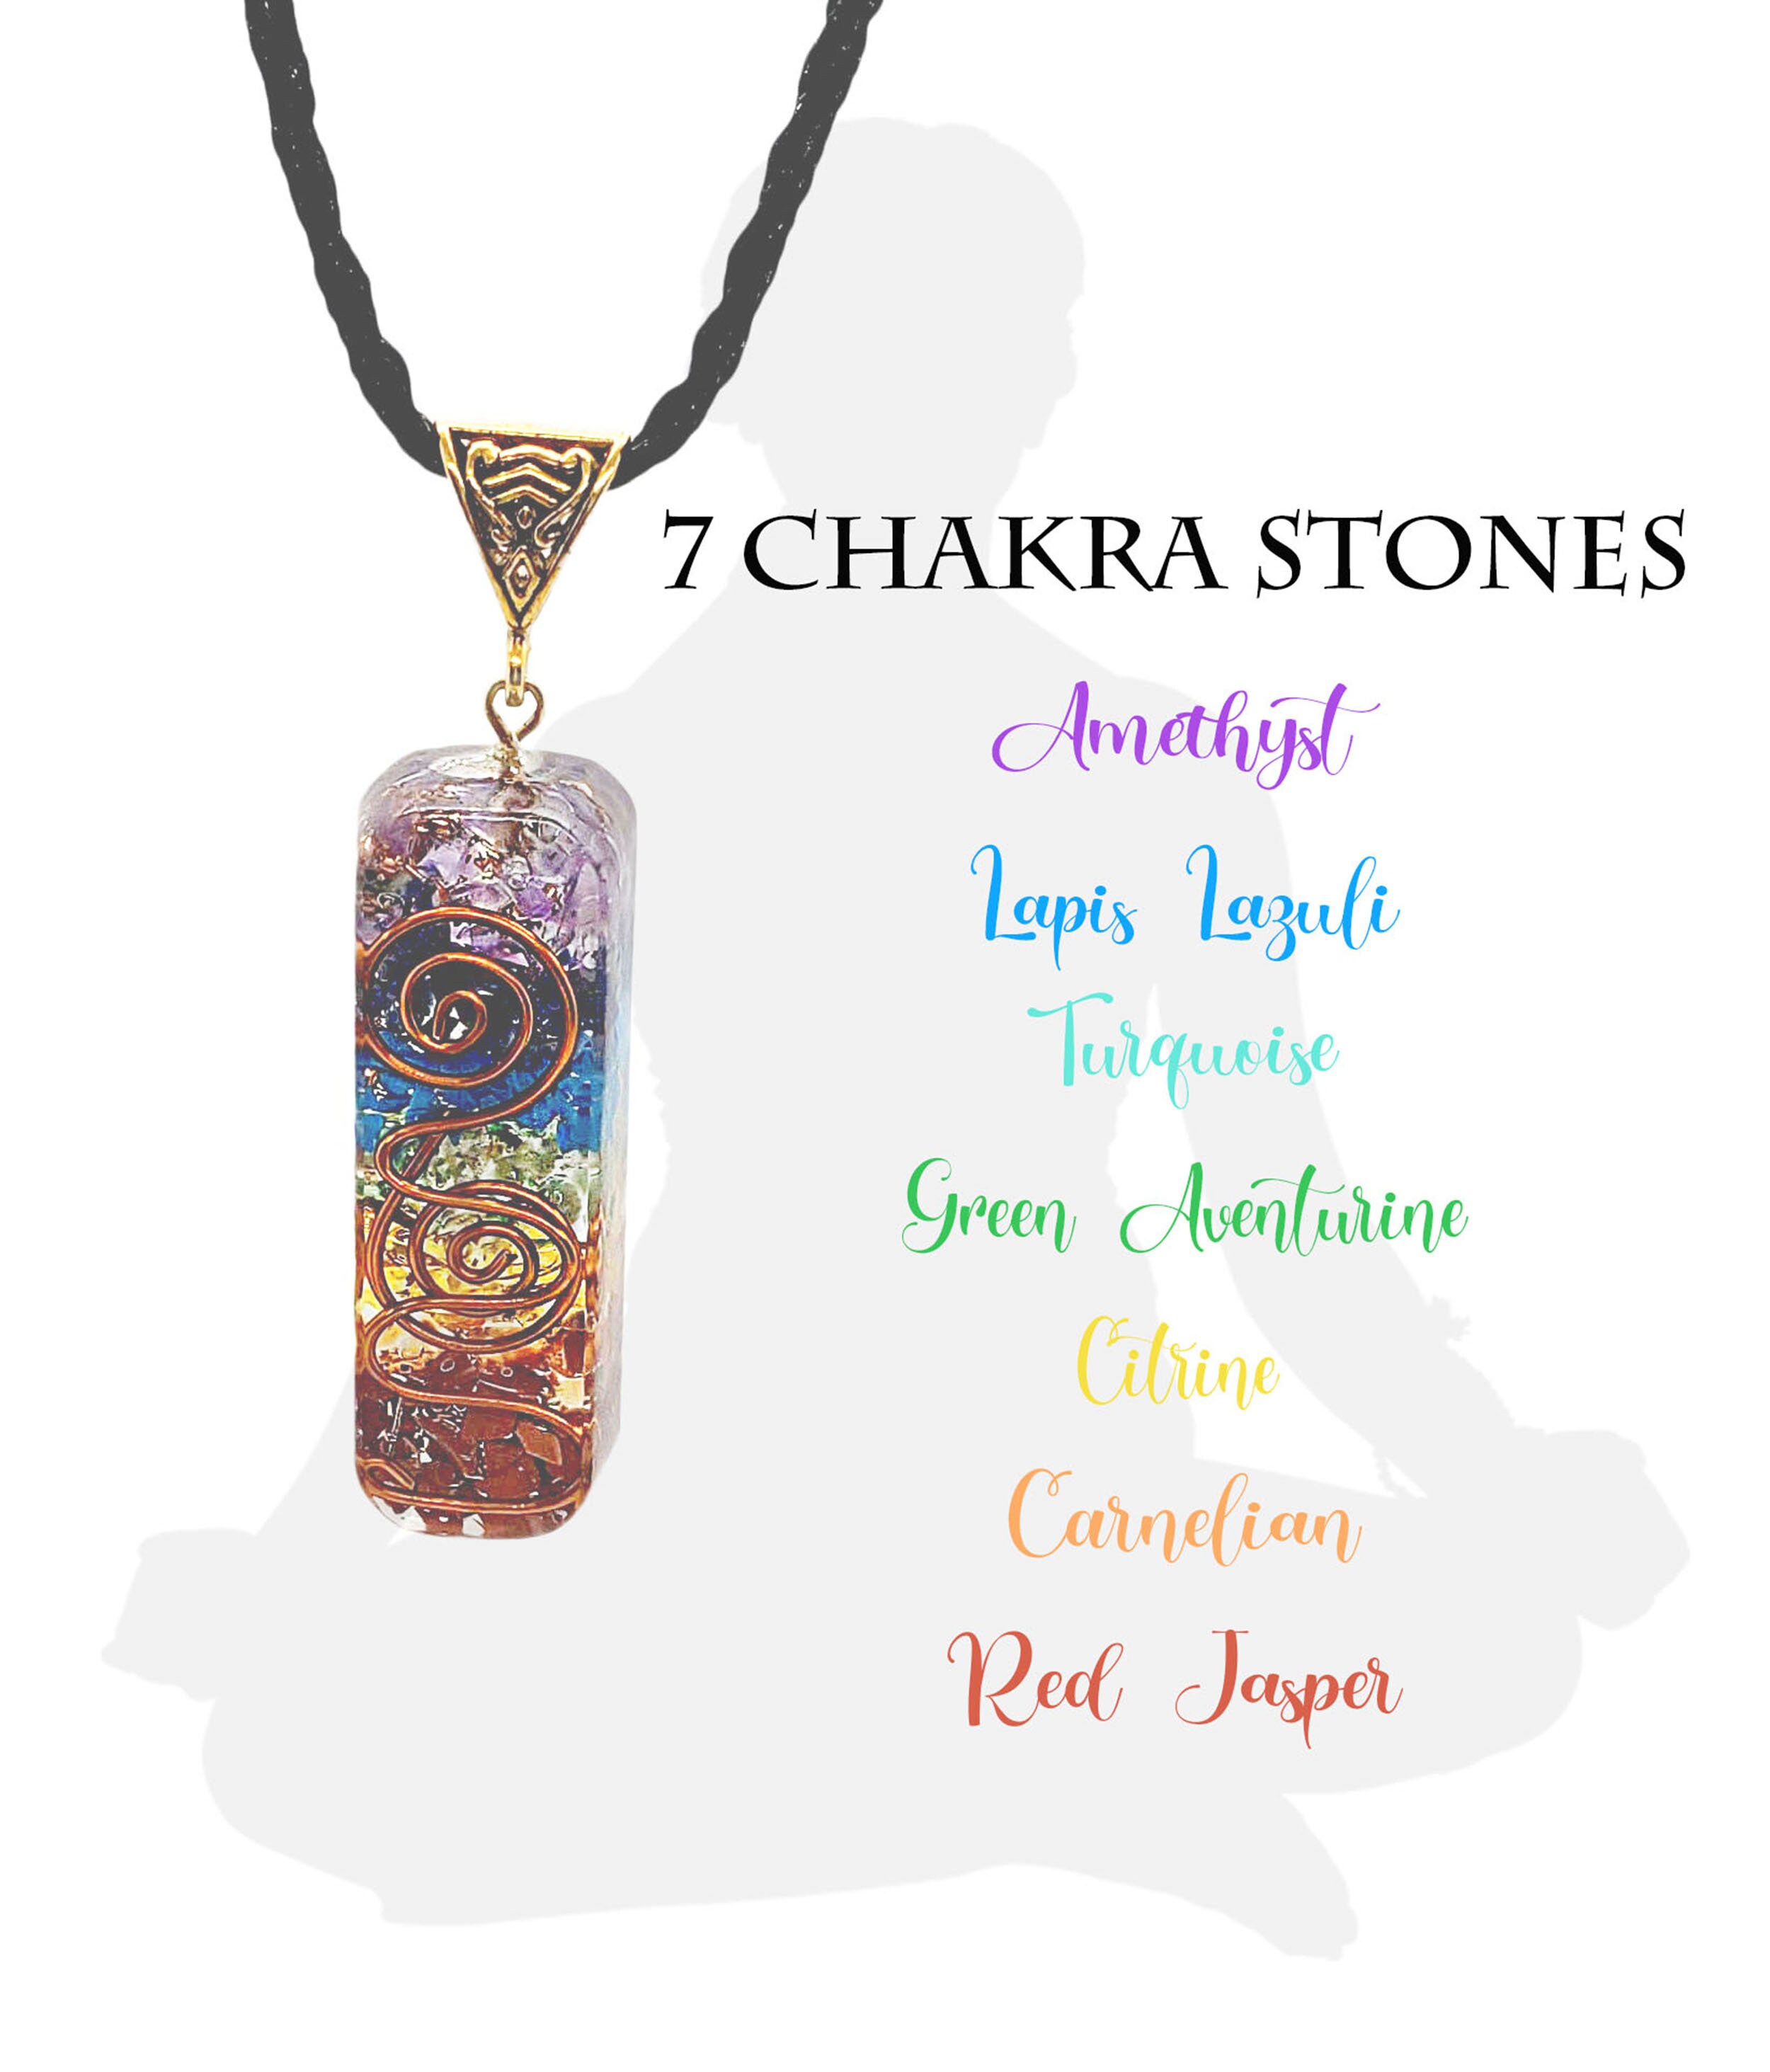 7 Chakra Necklace 18 Kt Gold Filled Chain gemstones Seven Chakras